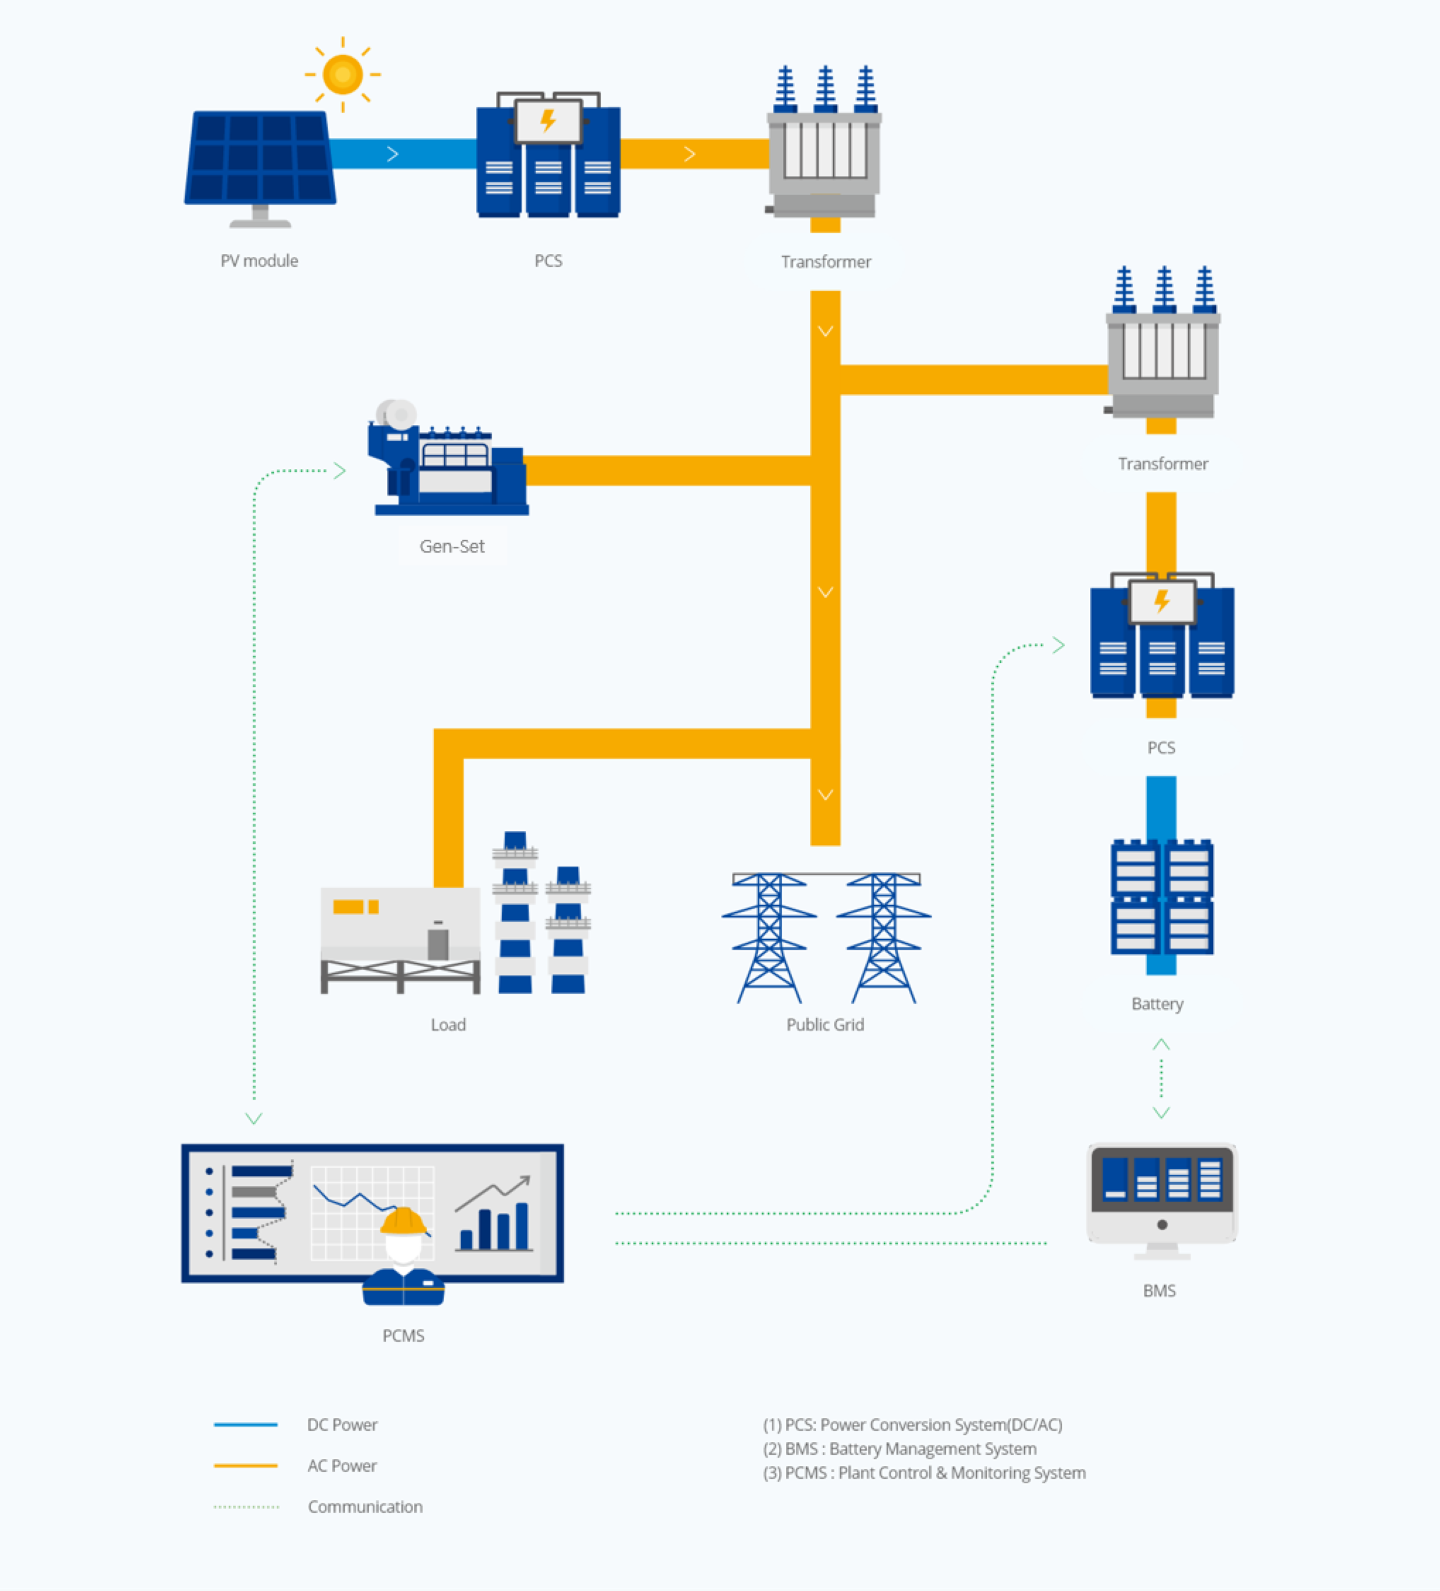 Hybrid power plant overall scheme